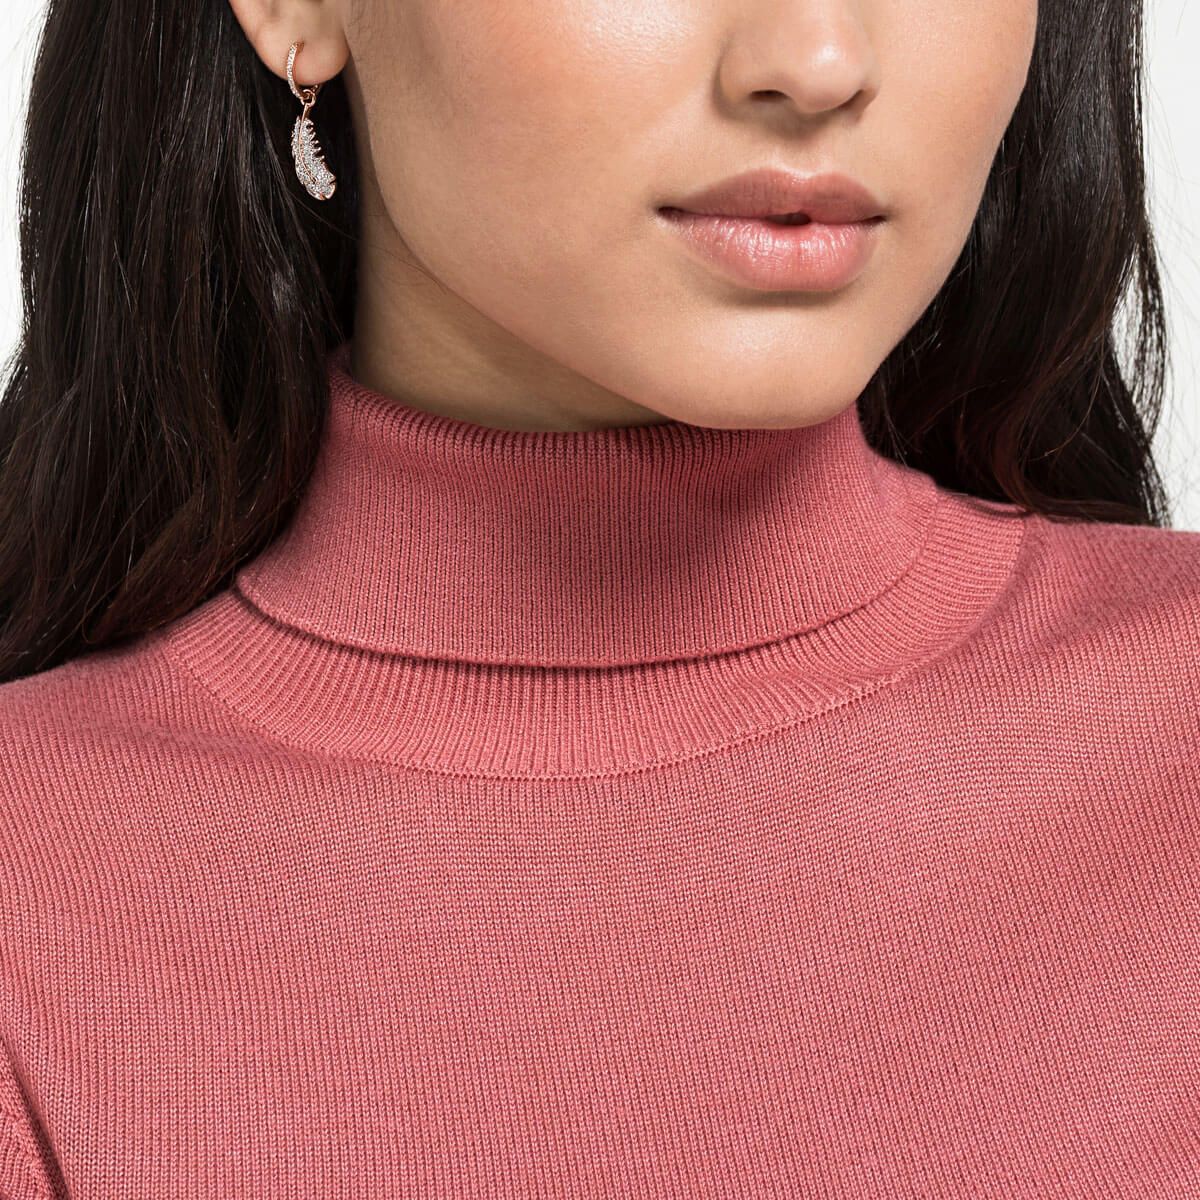 Buy Swarovski Naughty Hoop Pierced Earrings White And Rose Gold Tone Online